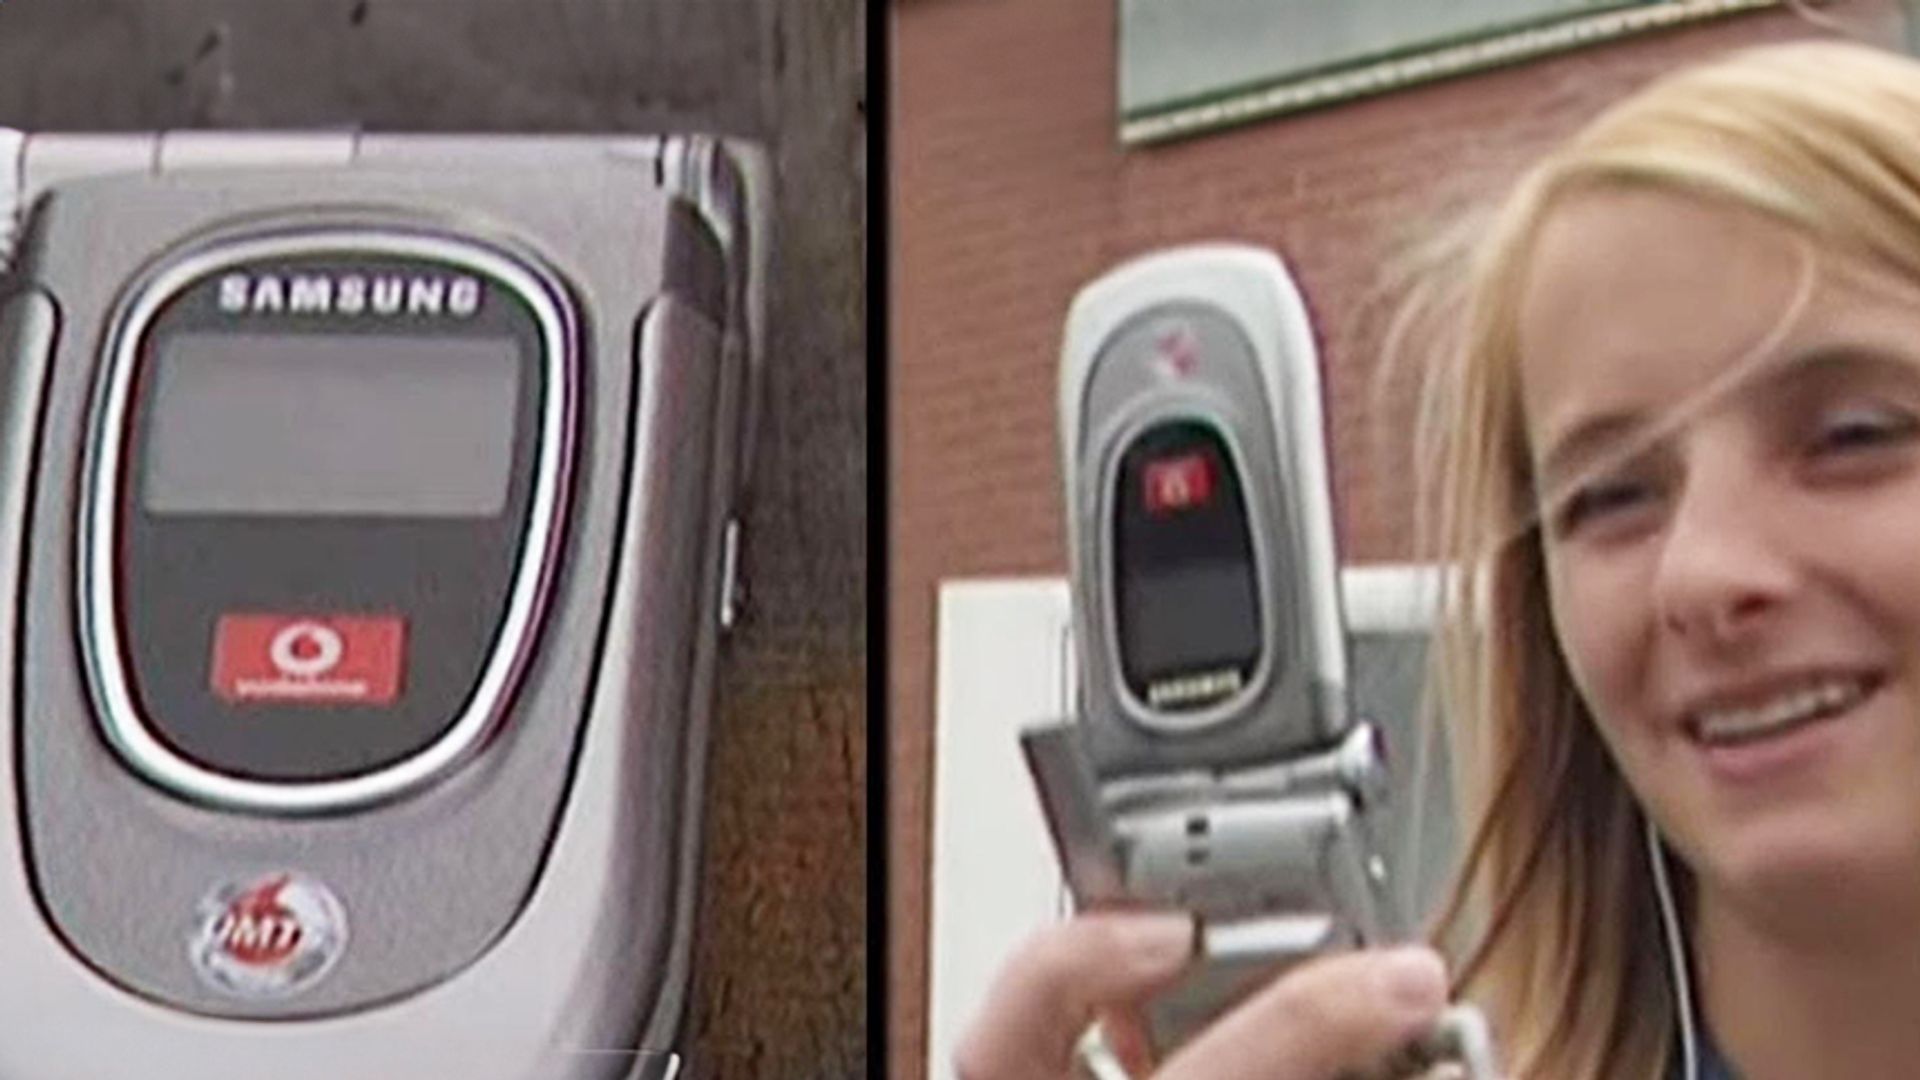 UMTS (3G) - Als das Internet auf das Handy kam (2003)